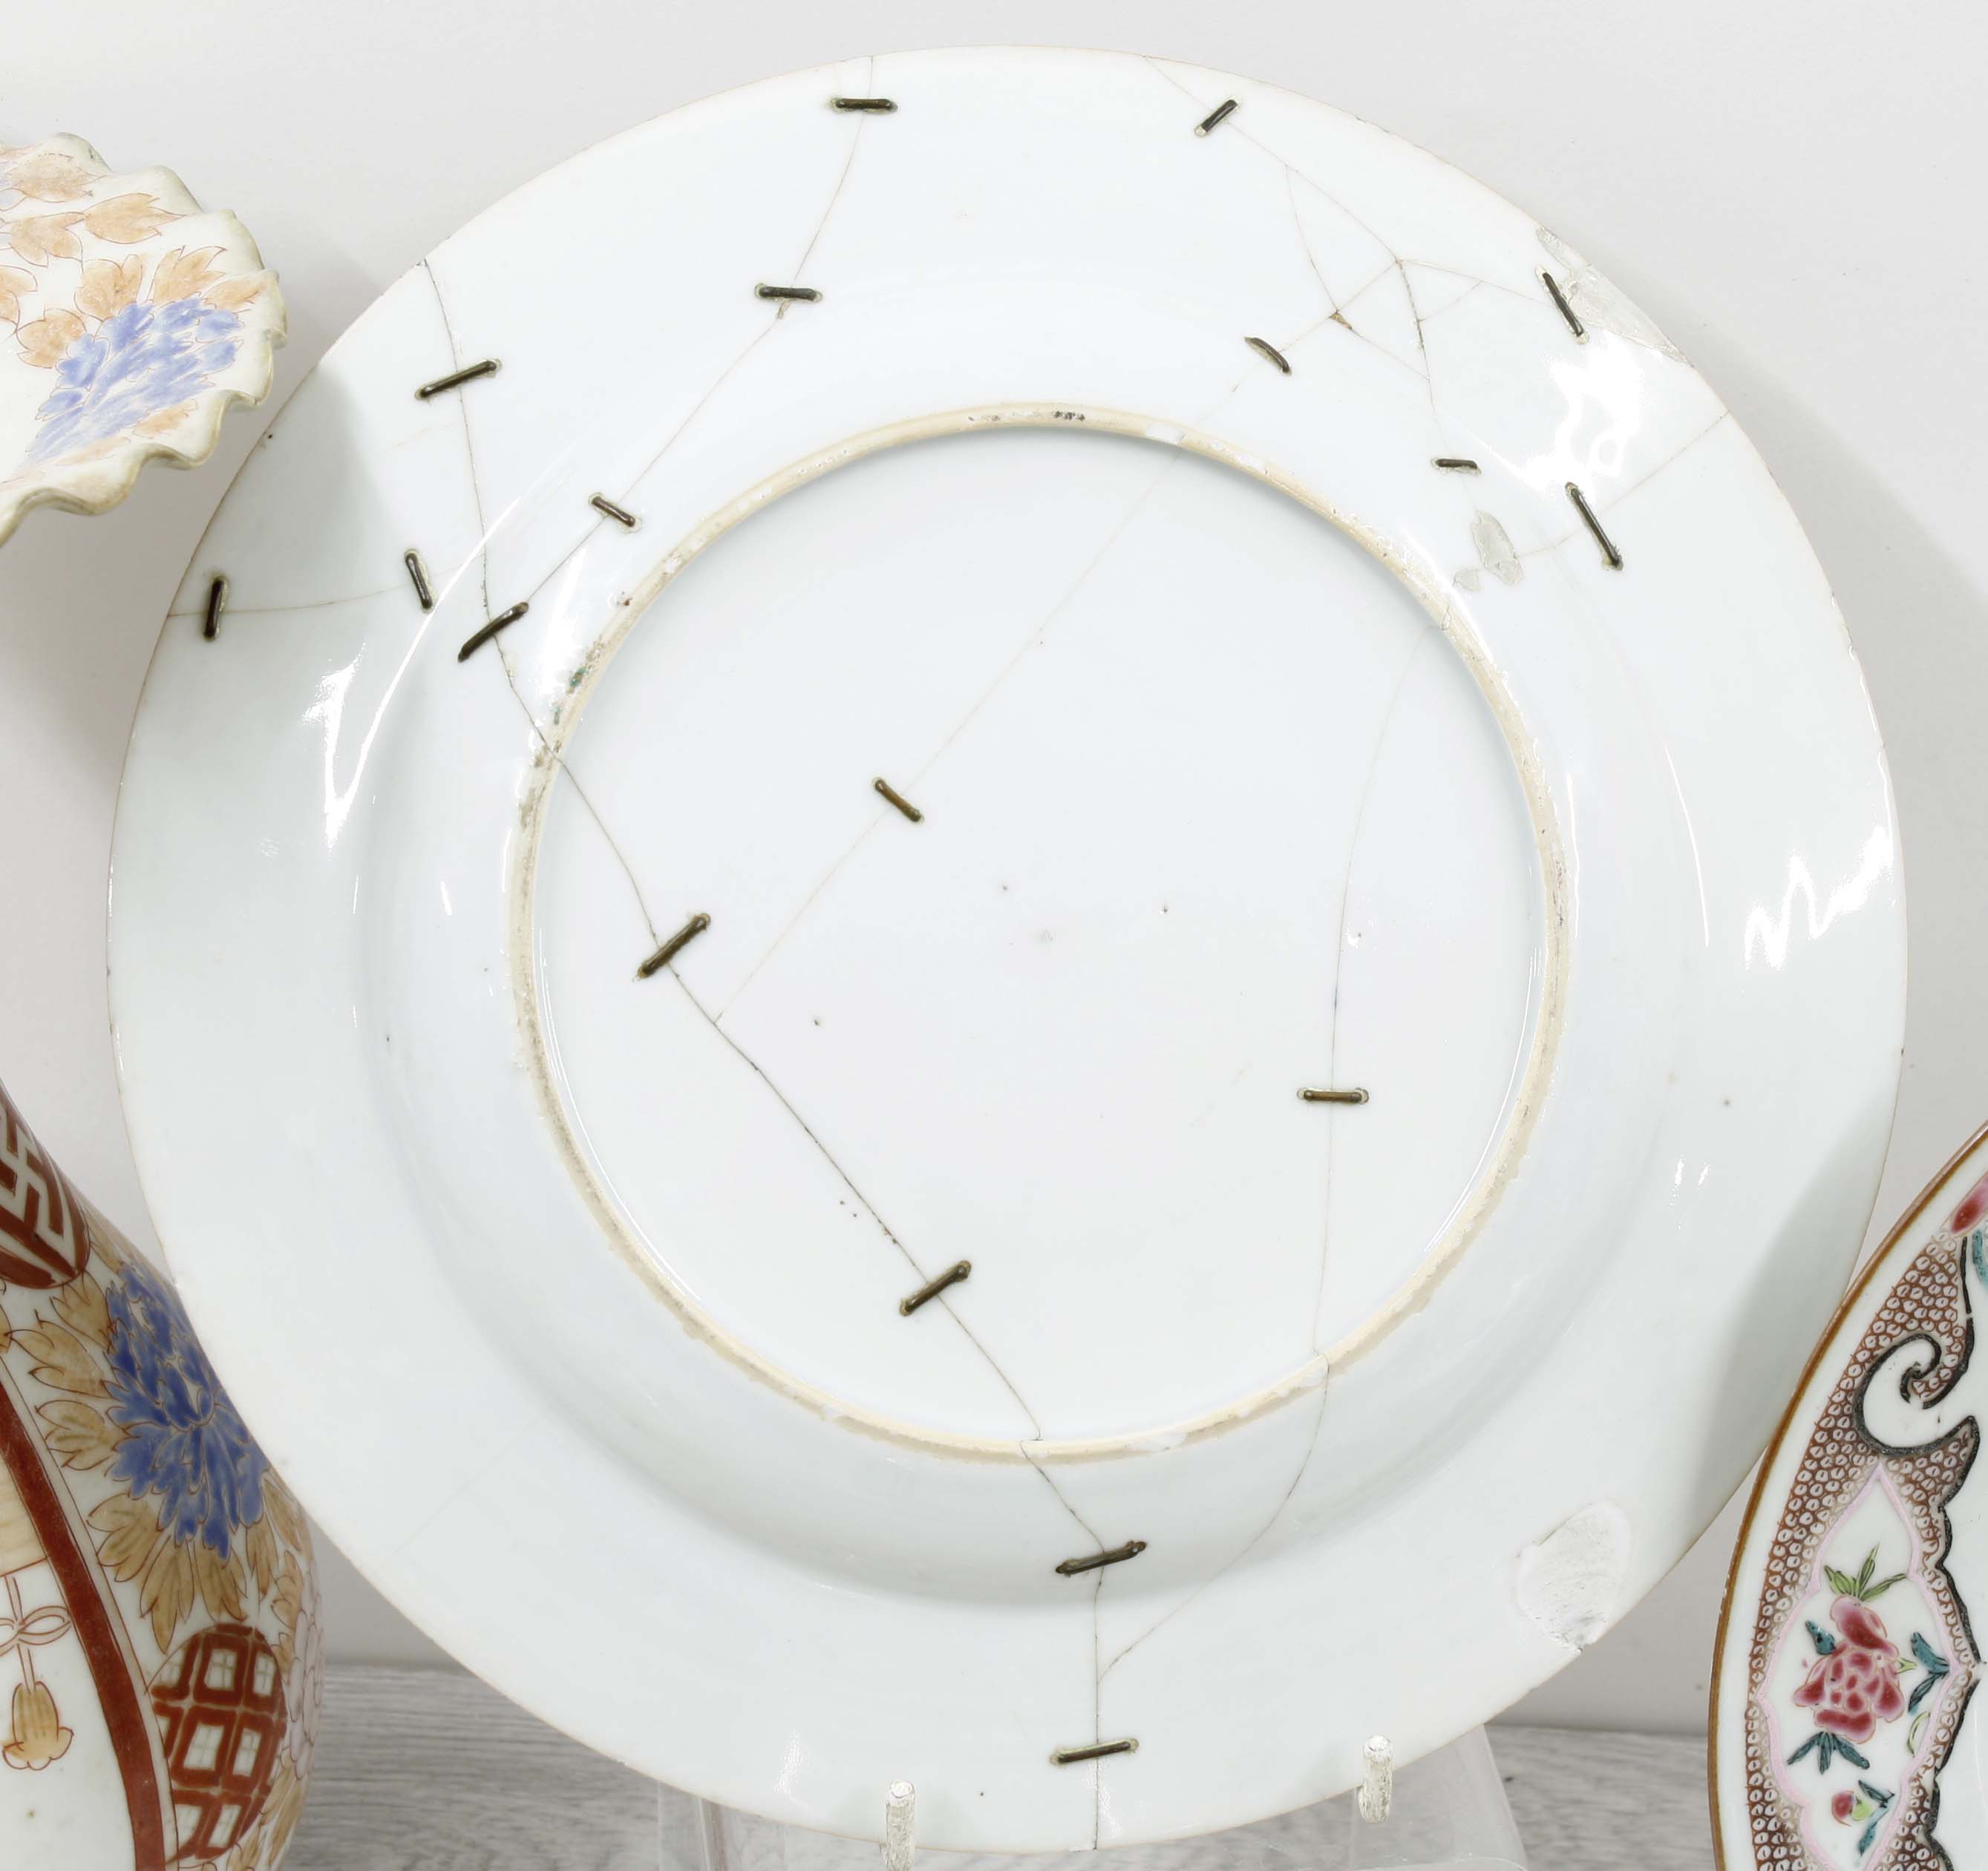 Selected Oriental porcelain items including blue and white jardinière (at fault), two vases, - Bild 3 aus 14